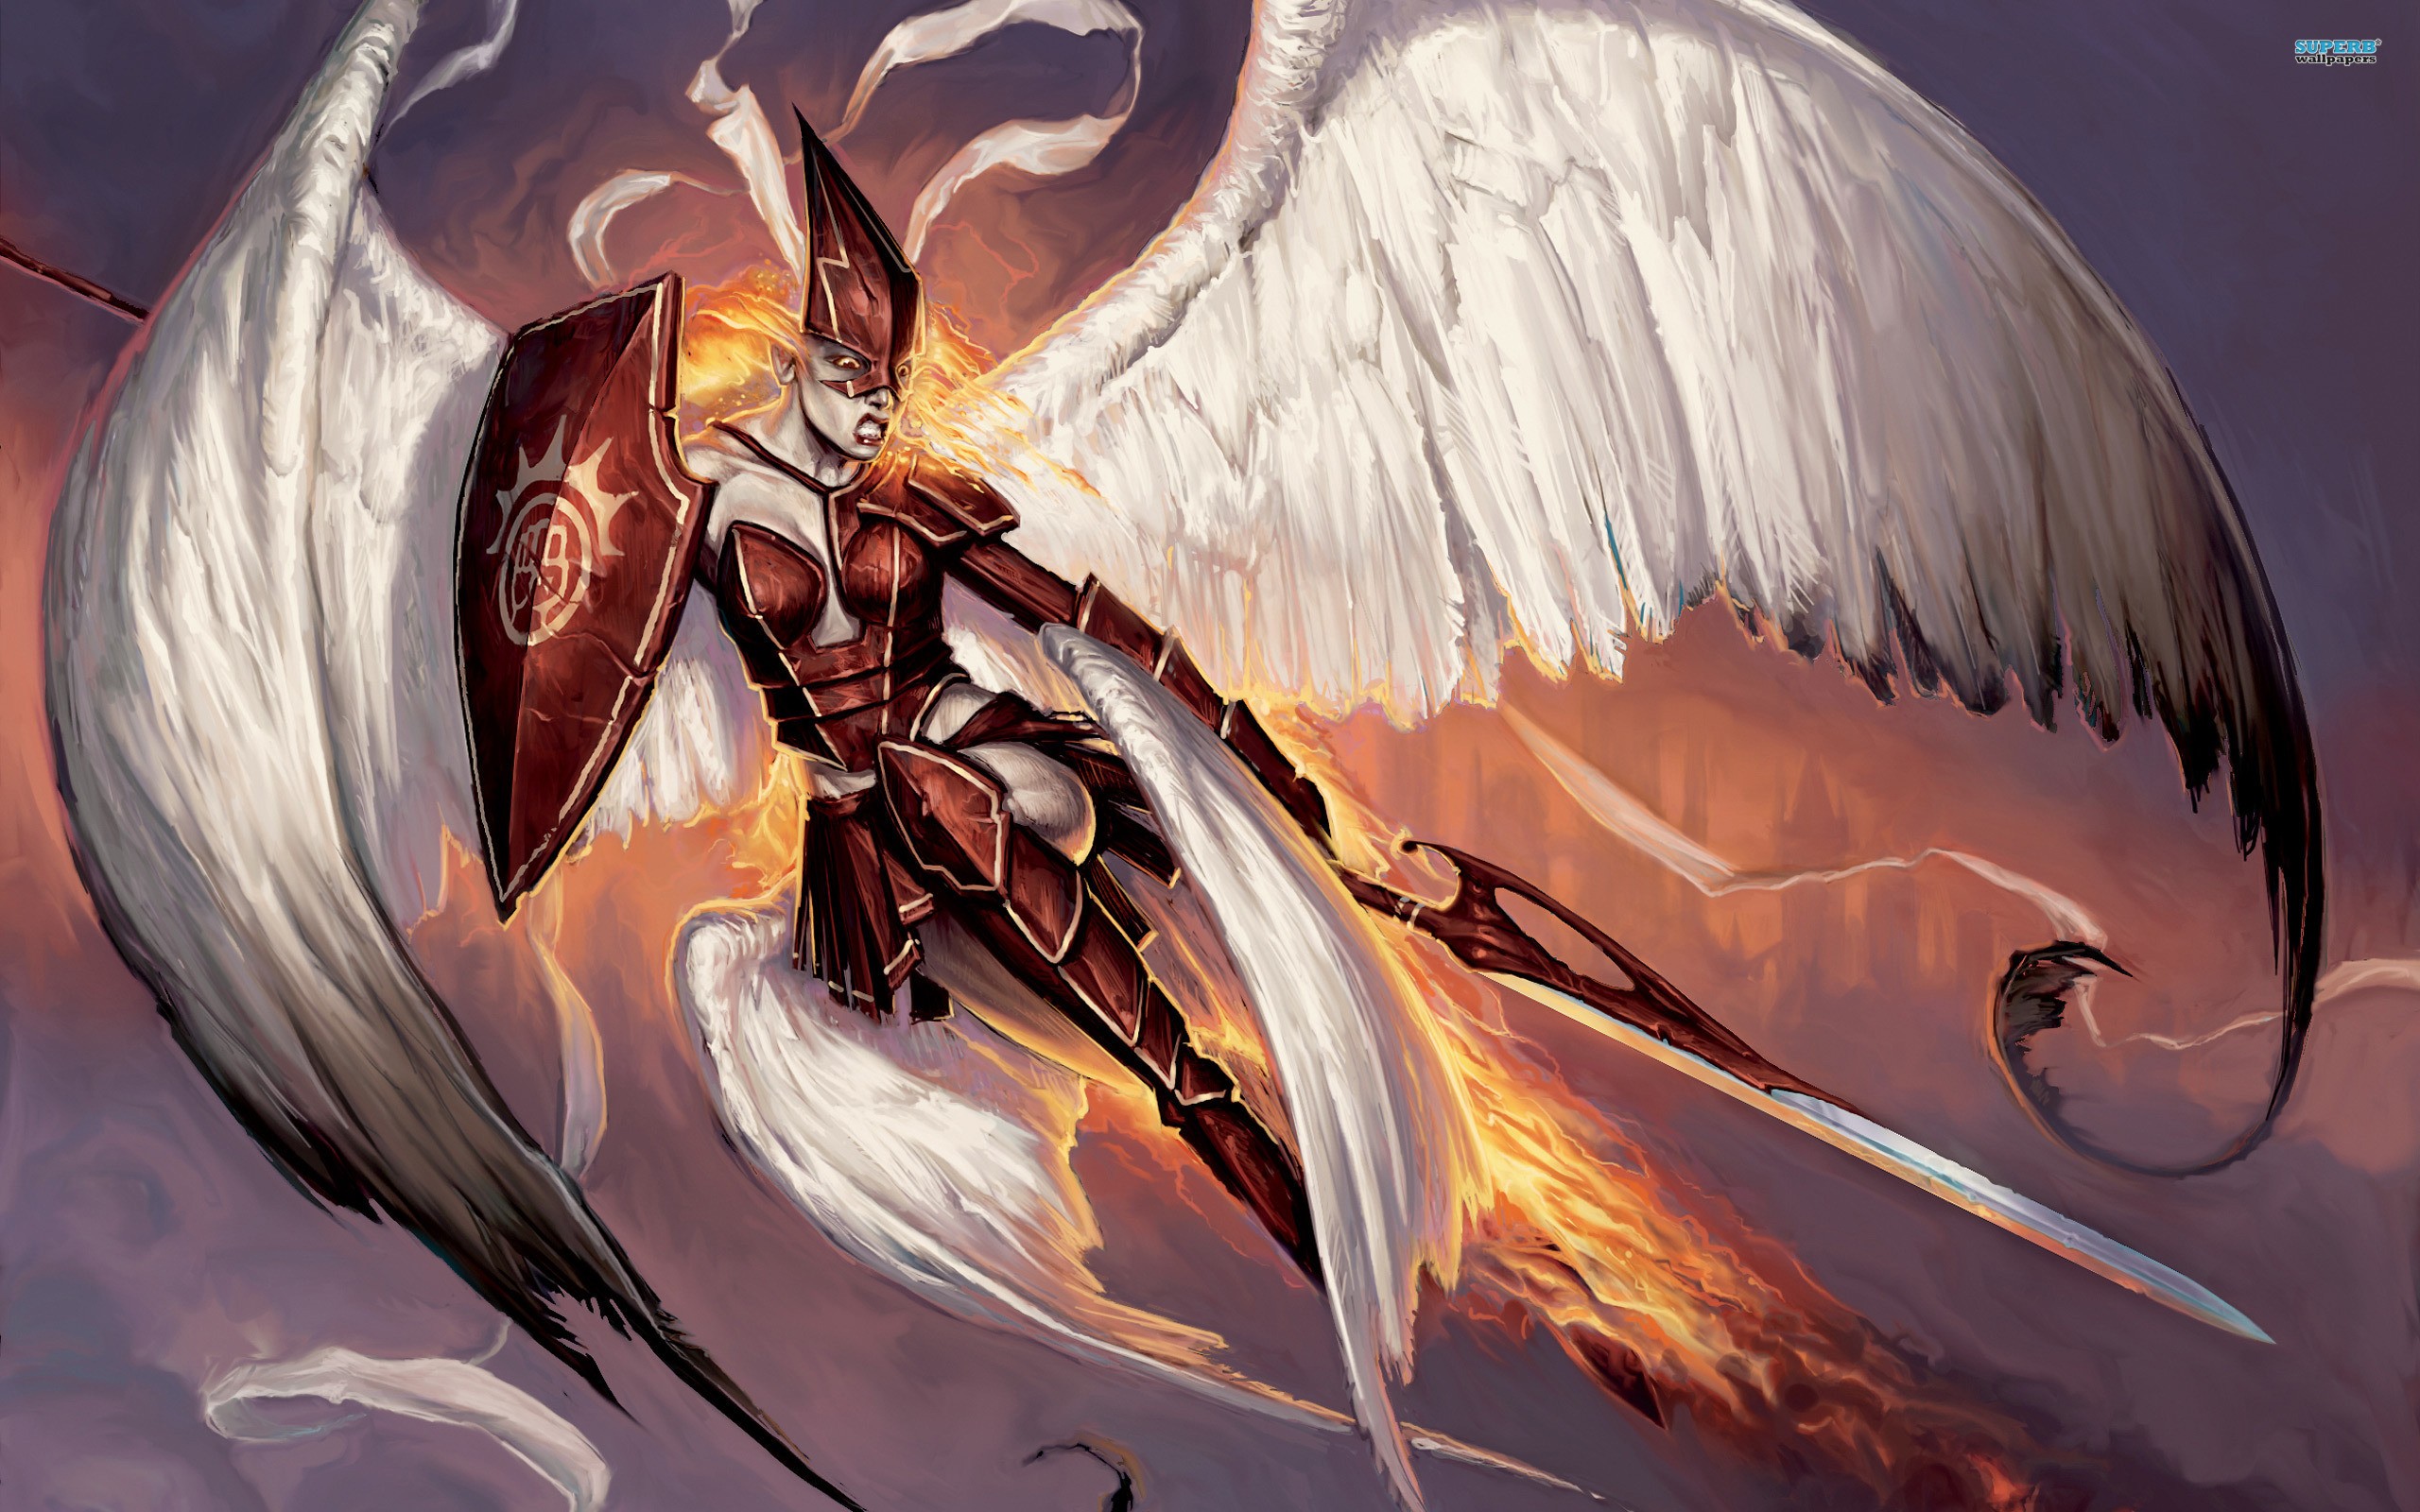 General 2560x1600 fantasy art angel Matt Cavotta women wings fantasy armor shield armor spear fantasy girl digital art watermarked